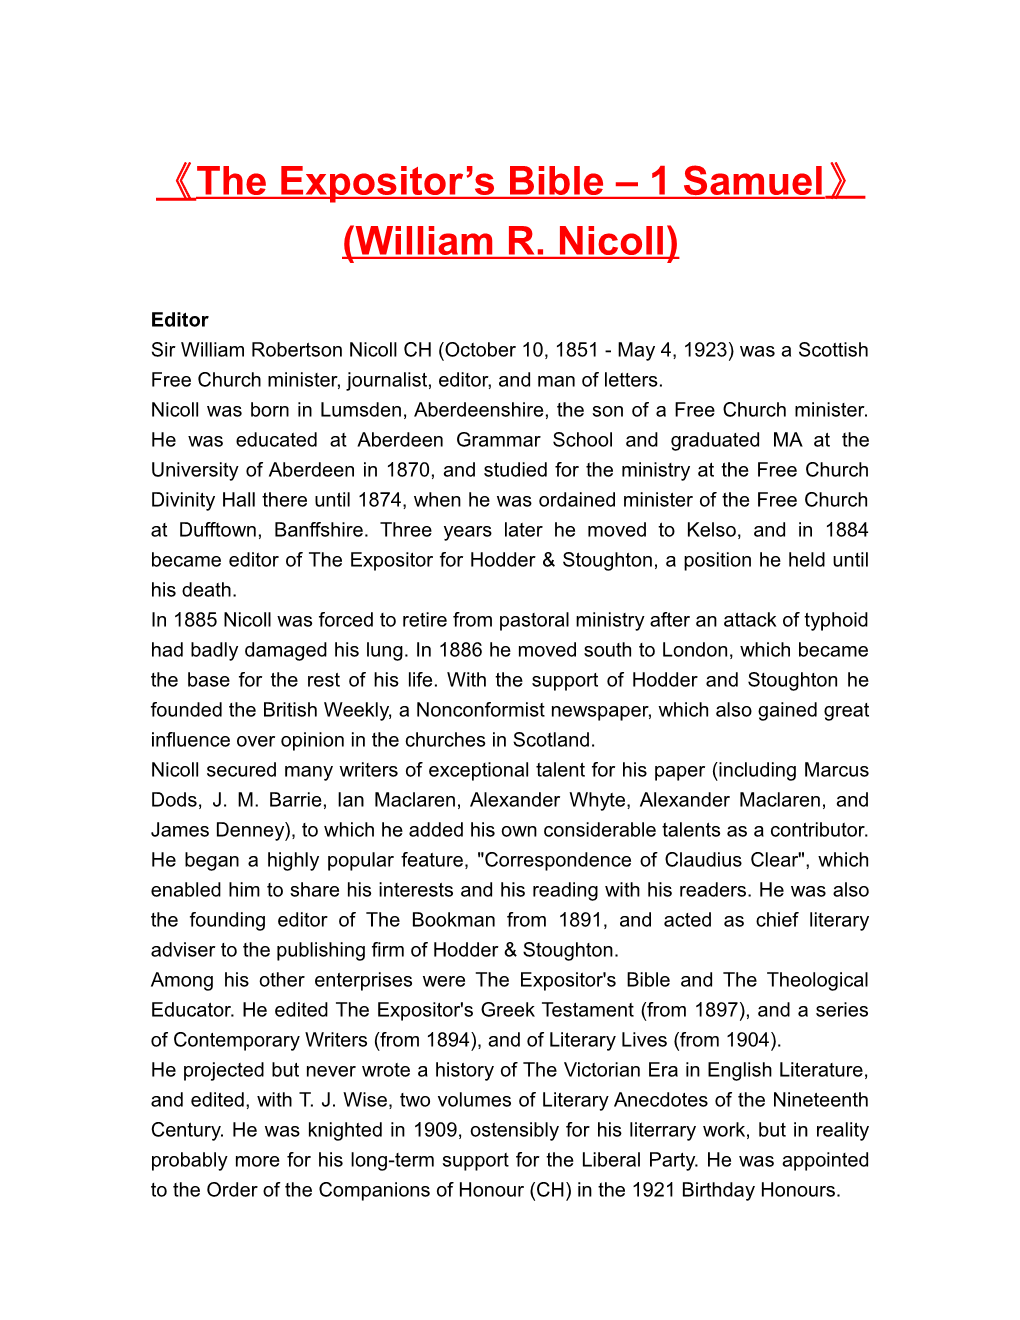 The Expositor S Bible 1 Samuel (William R. Nicoll)